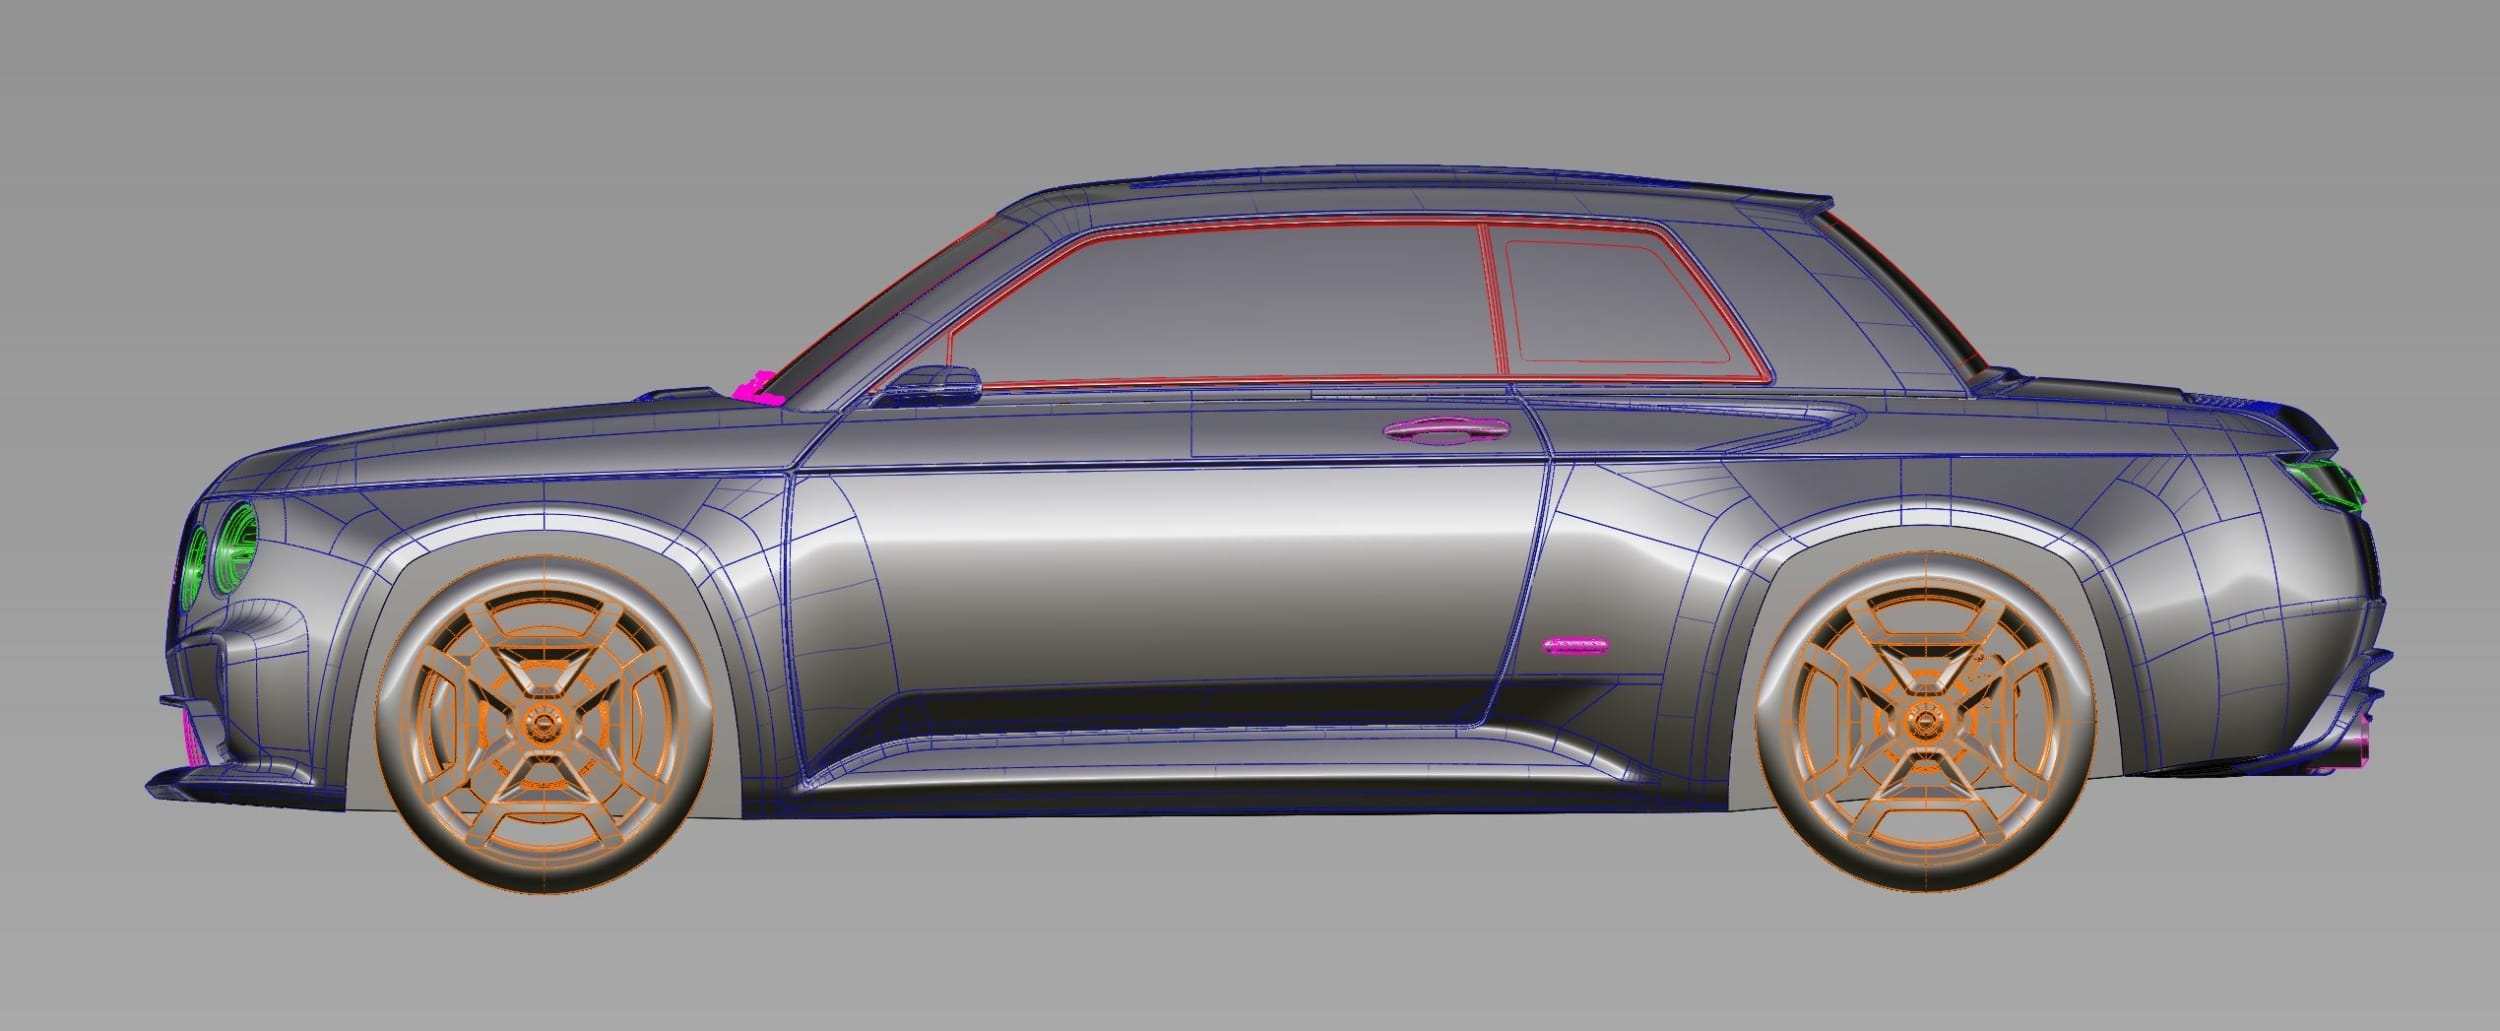 Concept 3D de Renault 8 Gordini - profil